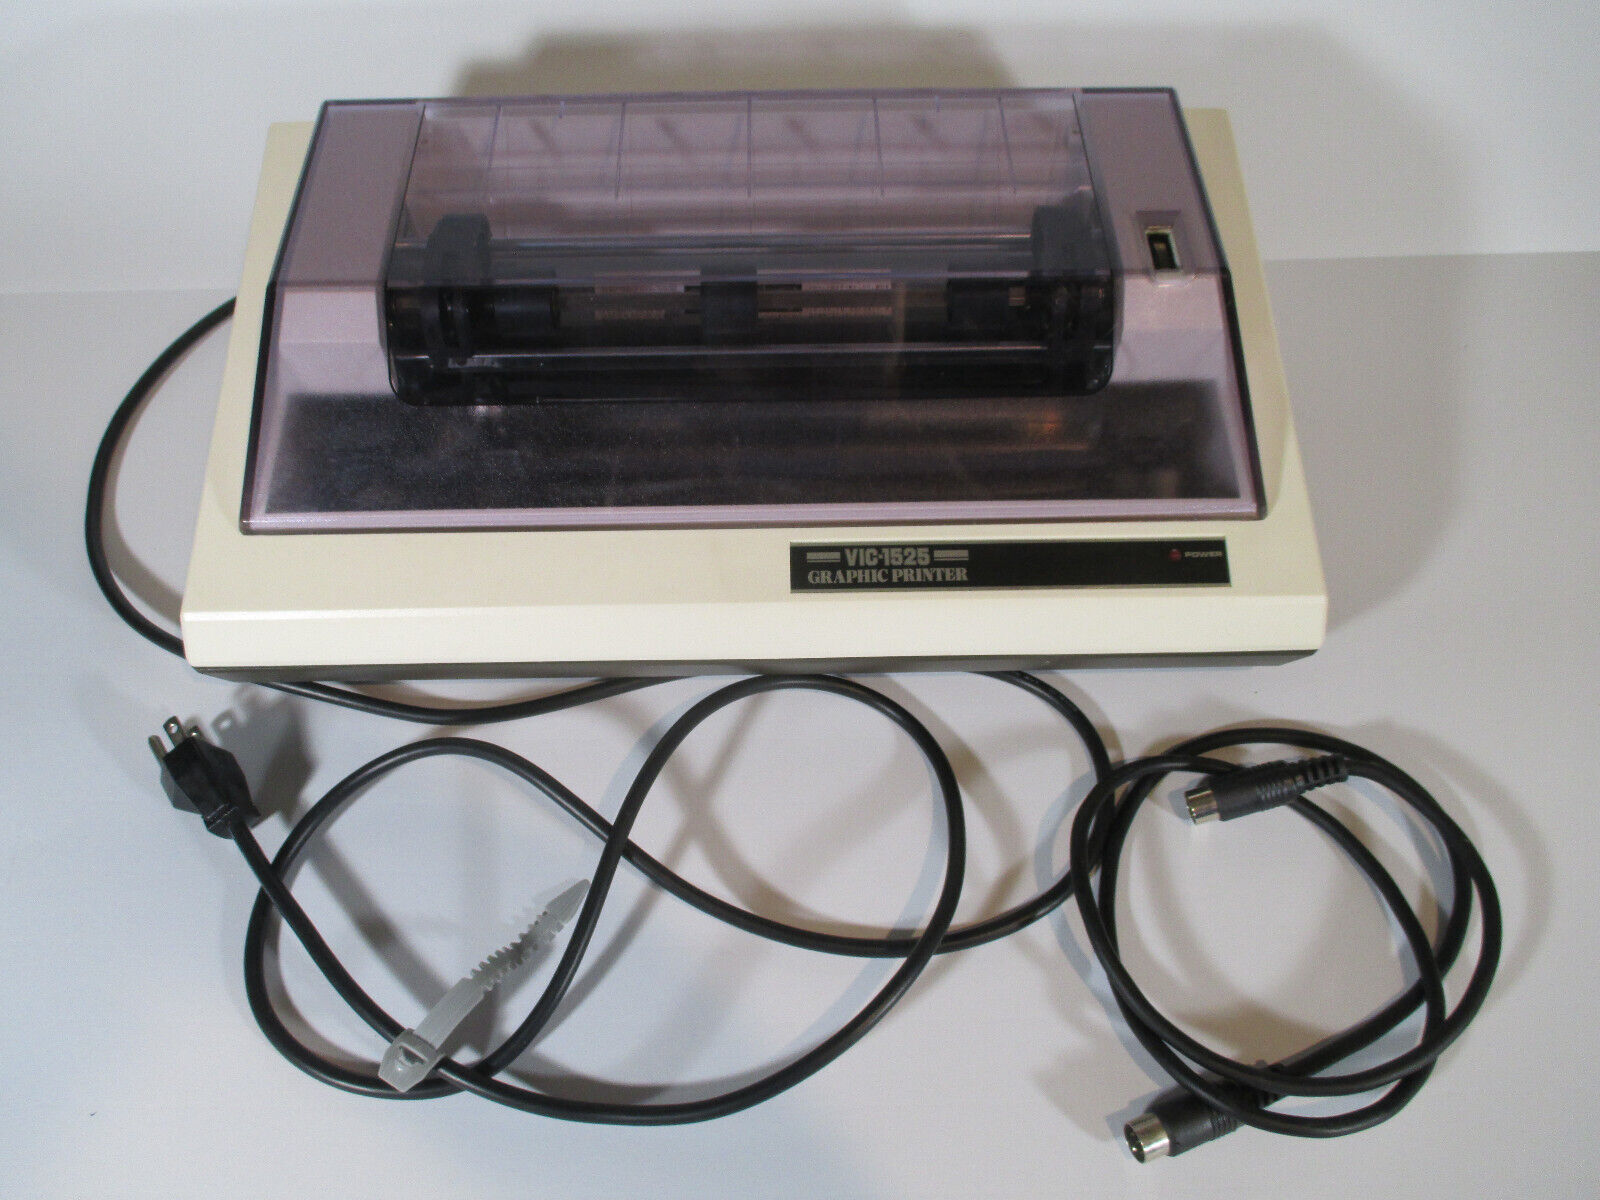 Vintage Commodore VIC-1525 Graphic Printer - Untested - Please Read Description